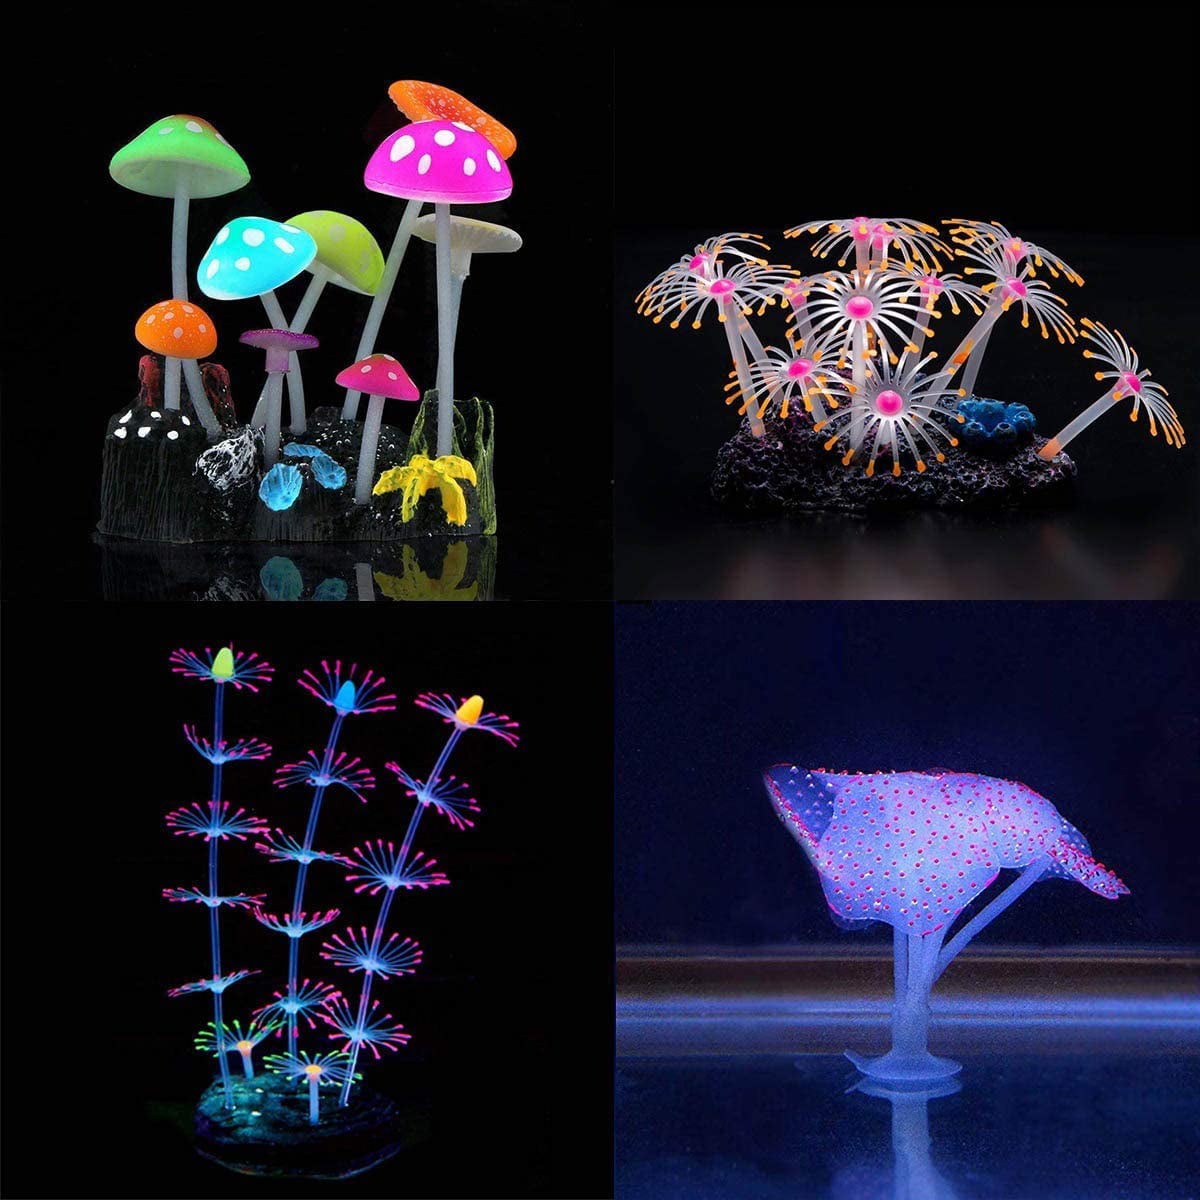 Glow Aquarium Decorations,Fish Tank Deco,Simulation Glow Plant Silicone for Fish Tank Decorations,Coral Reef,Anemone,Mushroom,Floating Plants,4 Pack